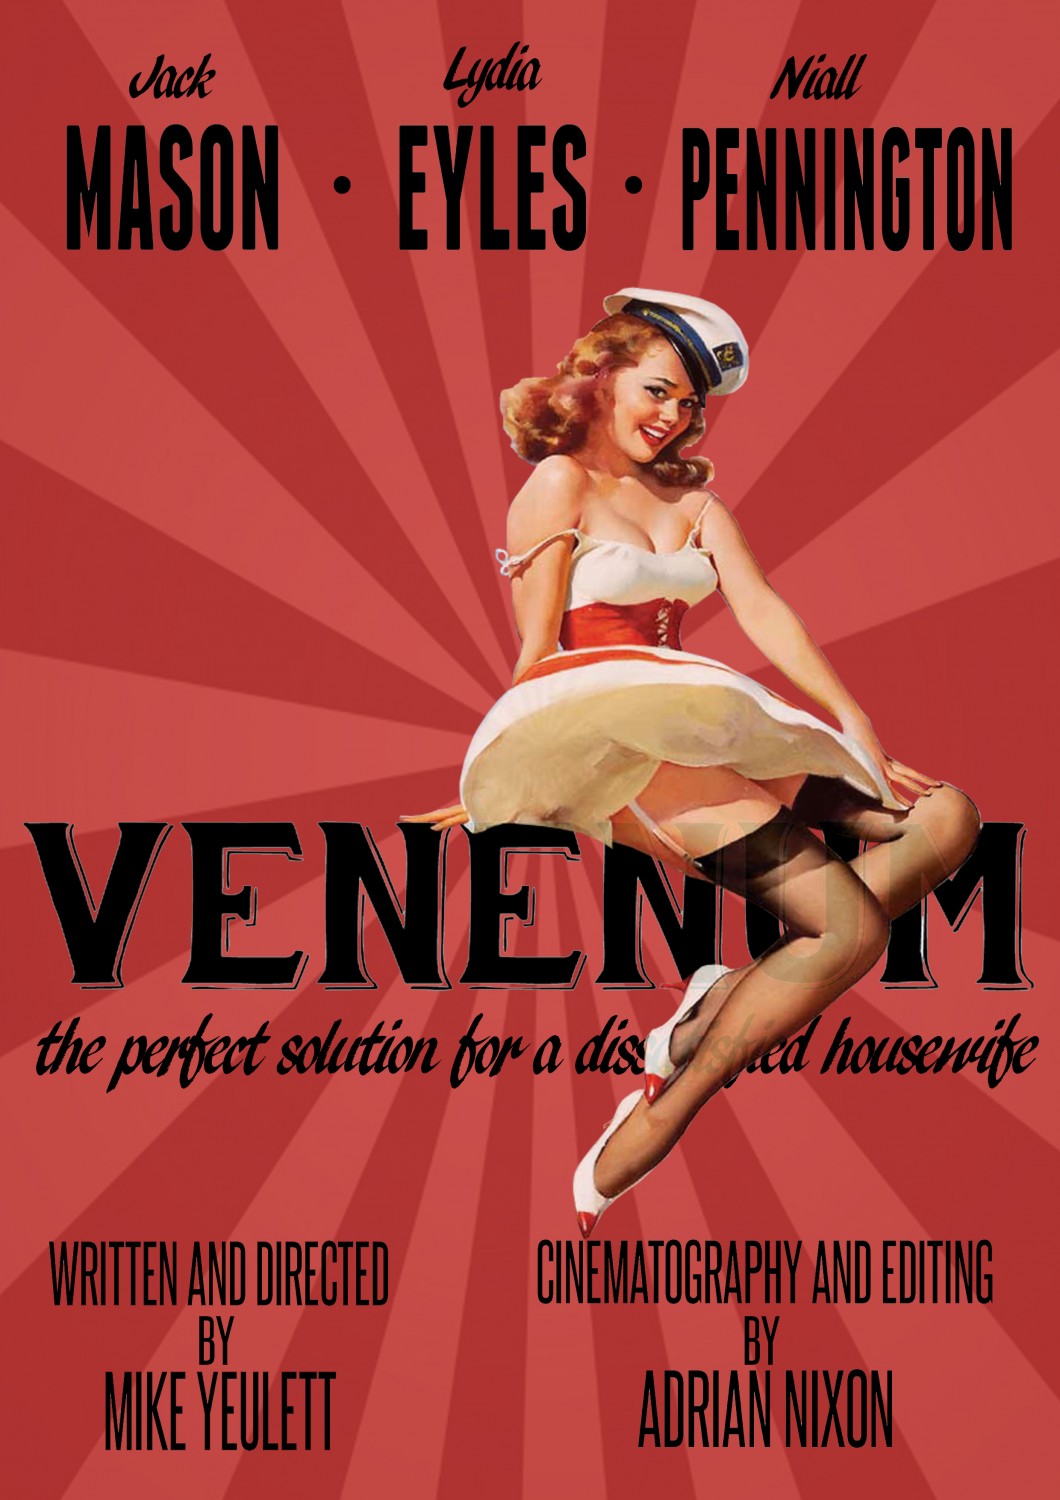 Extra Large Movie Poster Image for Venenum